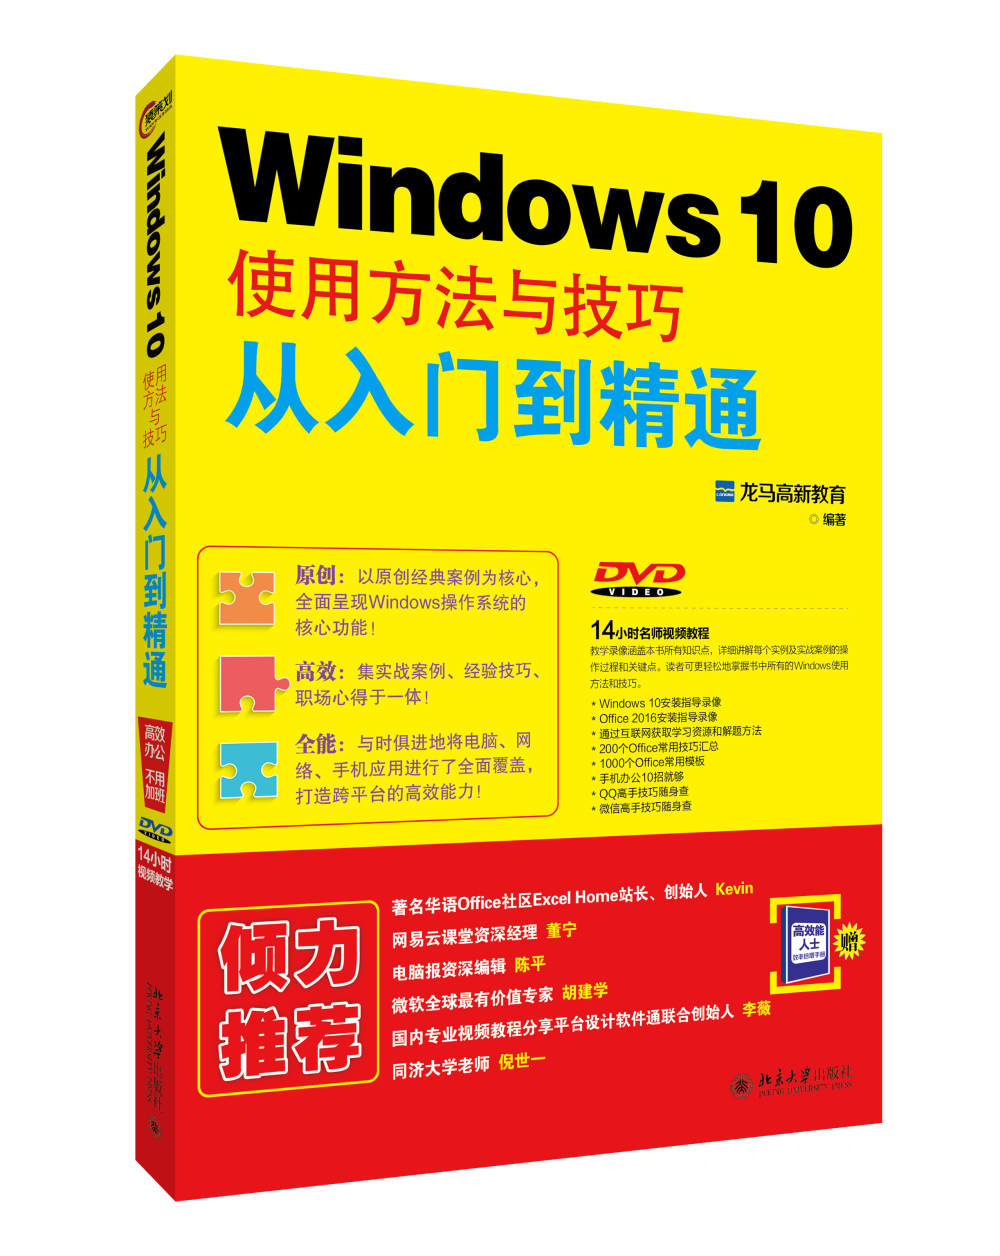 Windows 10使用方法与技巧从入门到精通 kindle格式下载